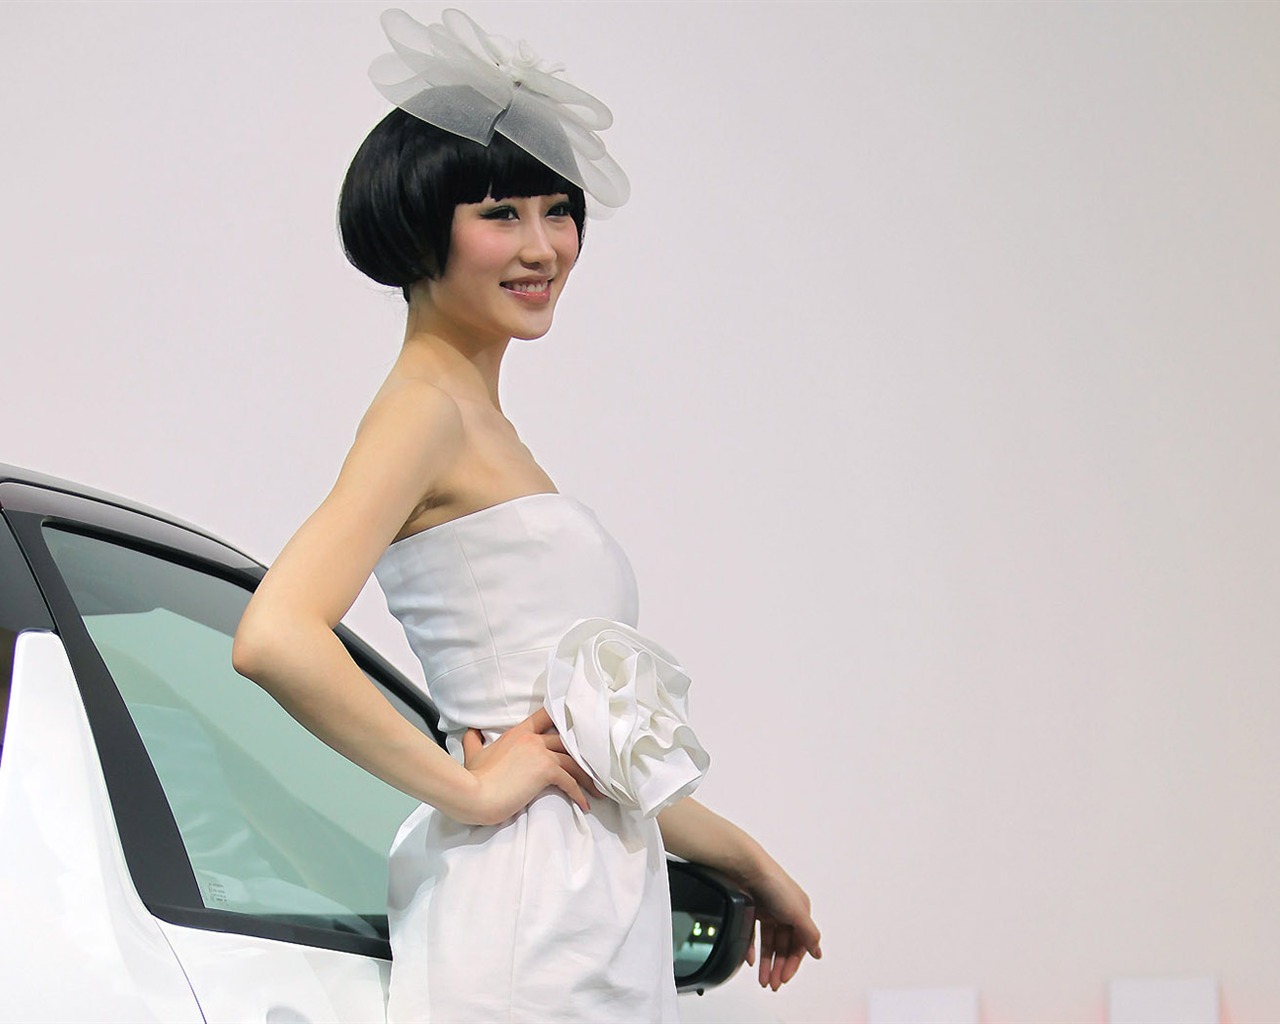 2010 Peking autosalonu modely aut odběrem (2) #8 - 1280x1024